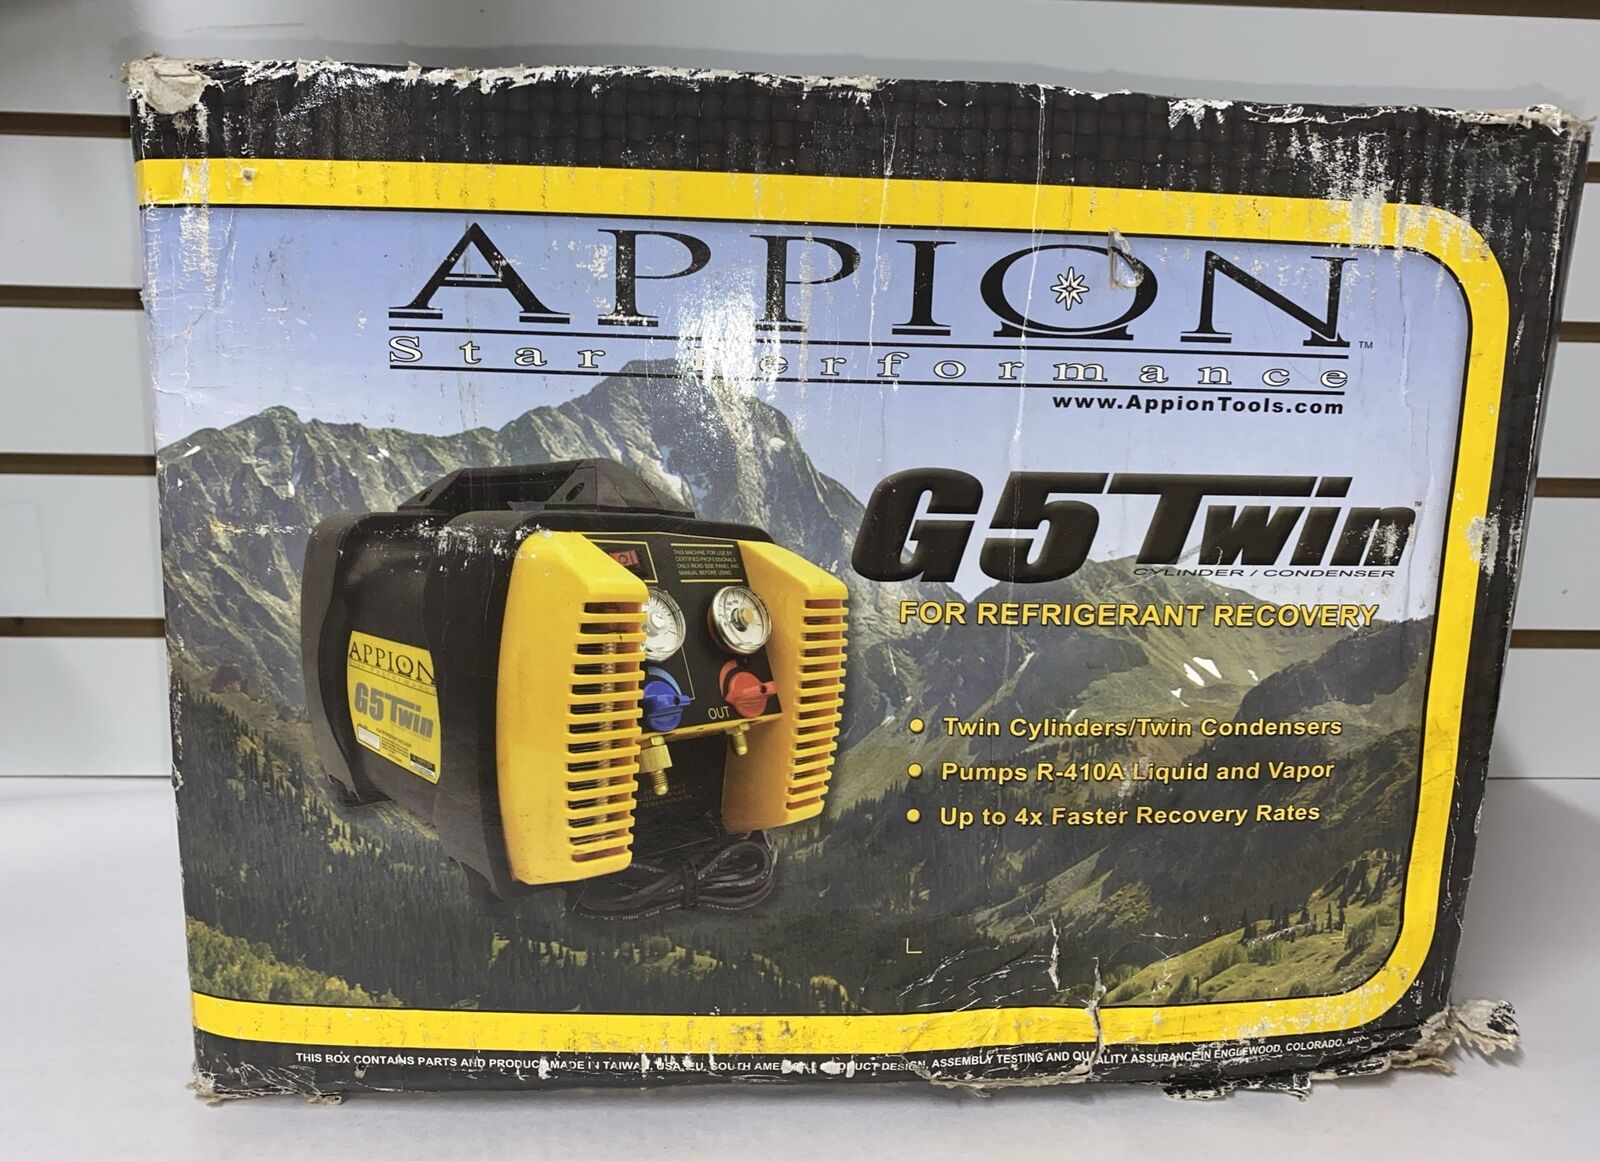 Appion G5TWIN Refrigerant Recovery Machine